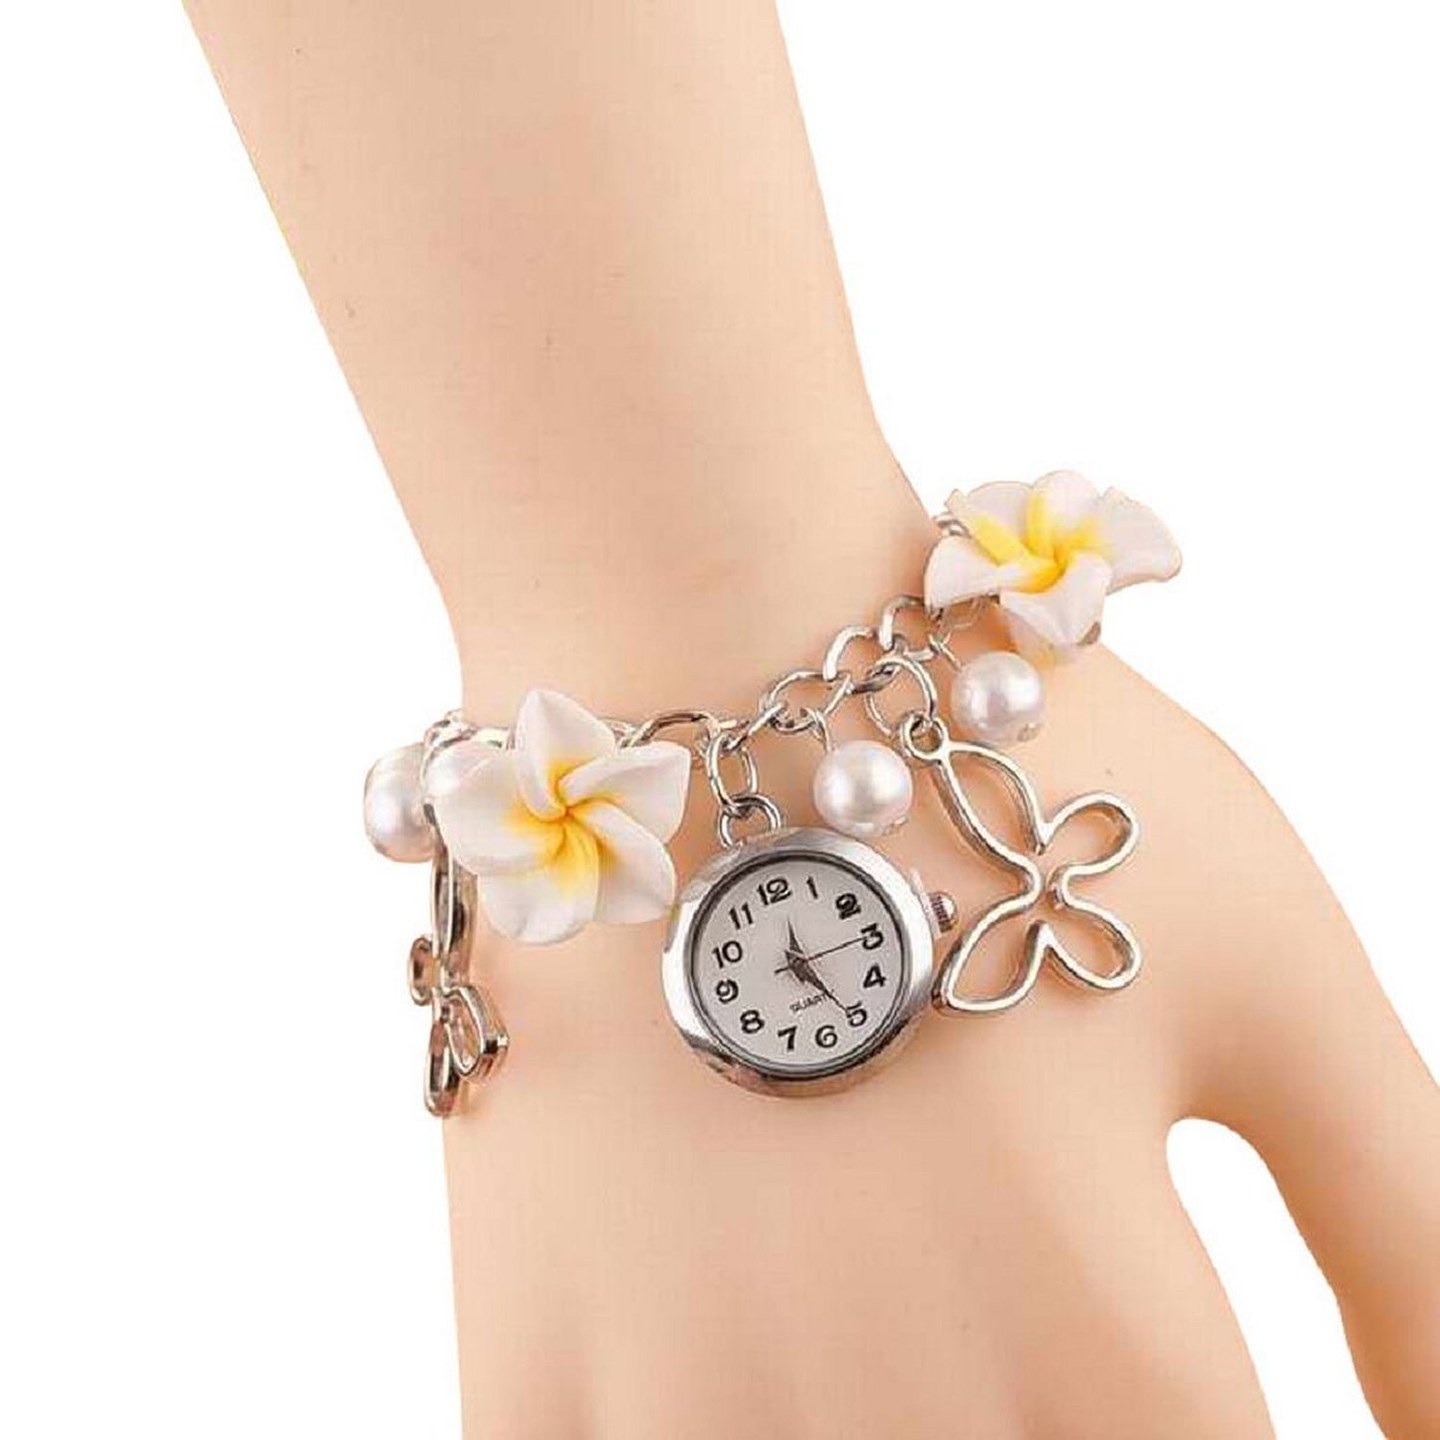 Ashiana Stylish White Flower and Butterfly Charm Bracelet Style Watch